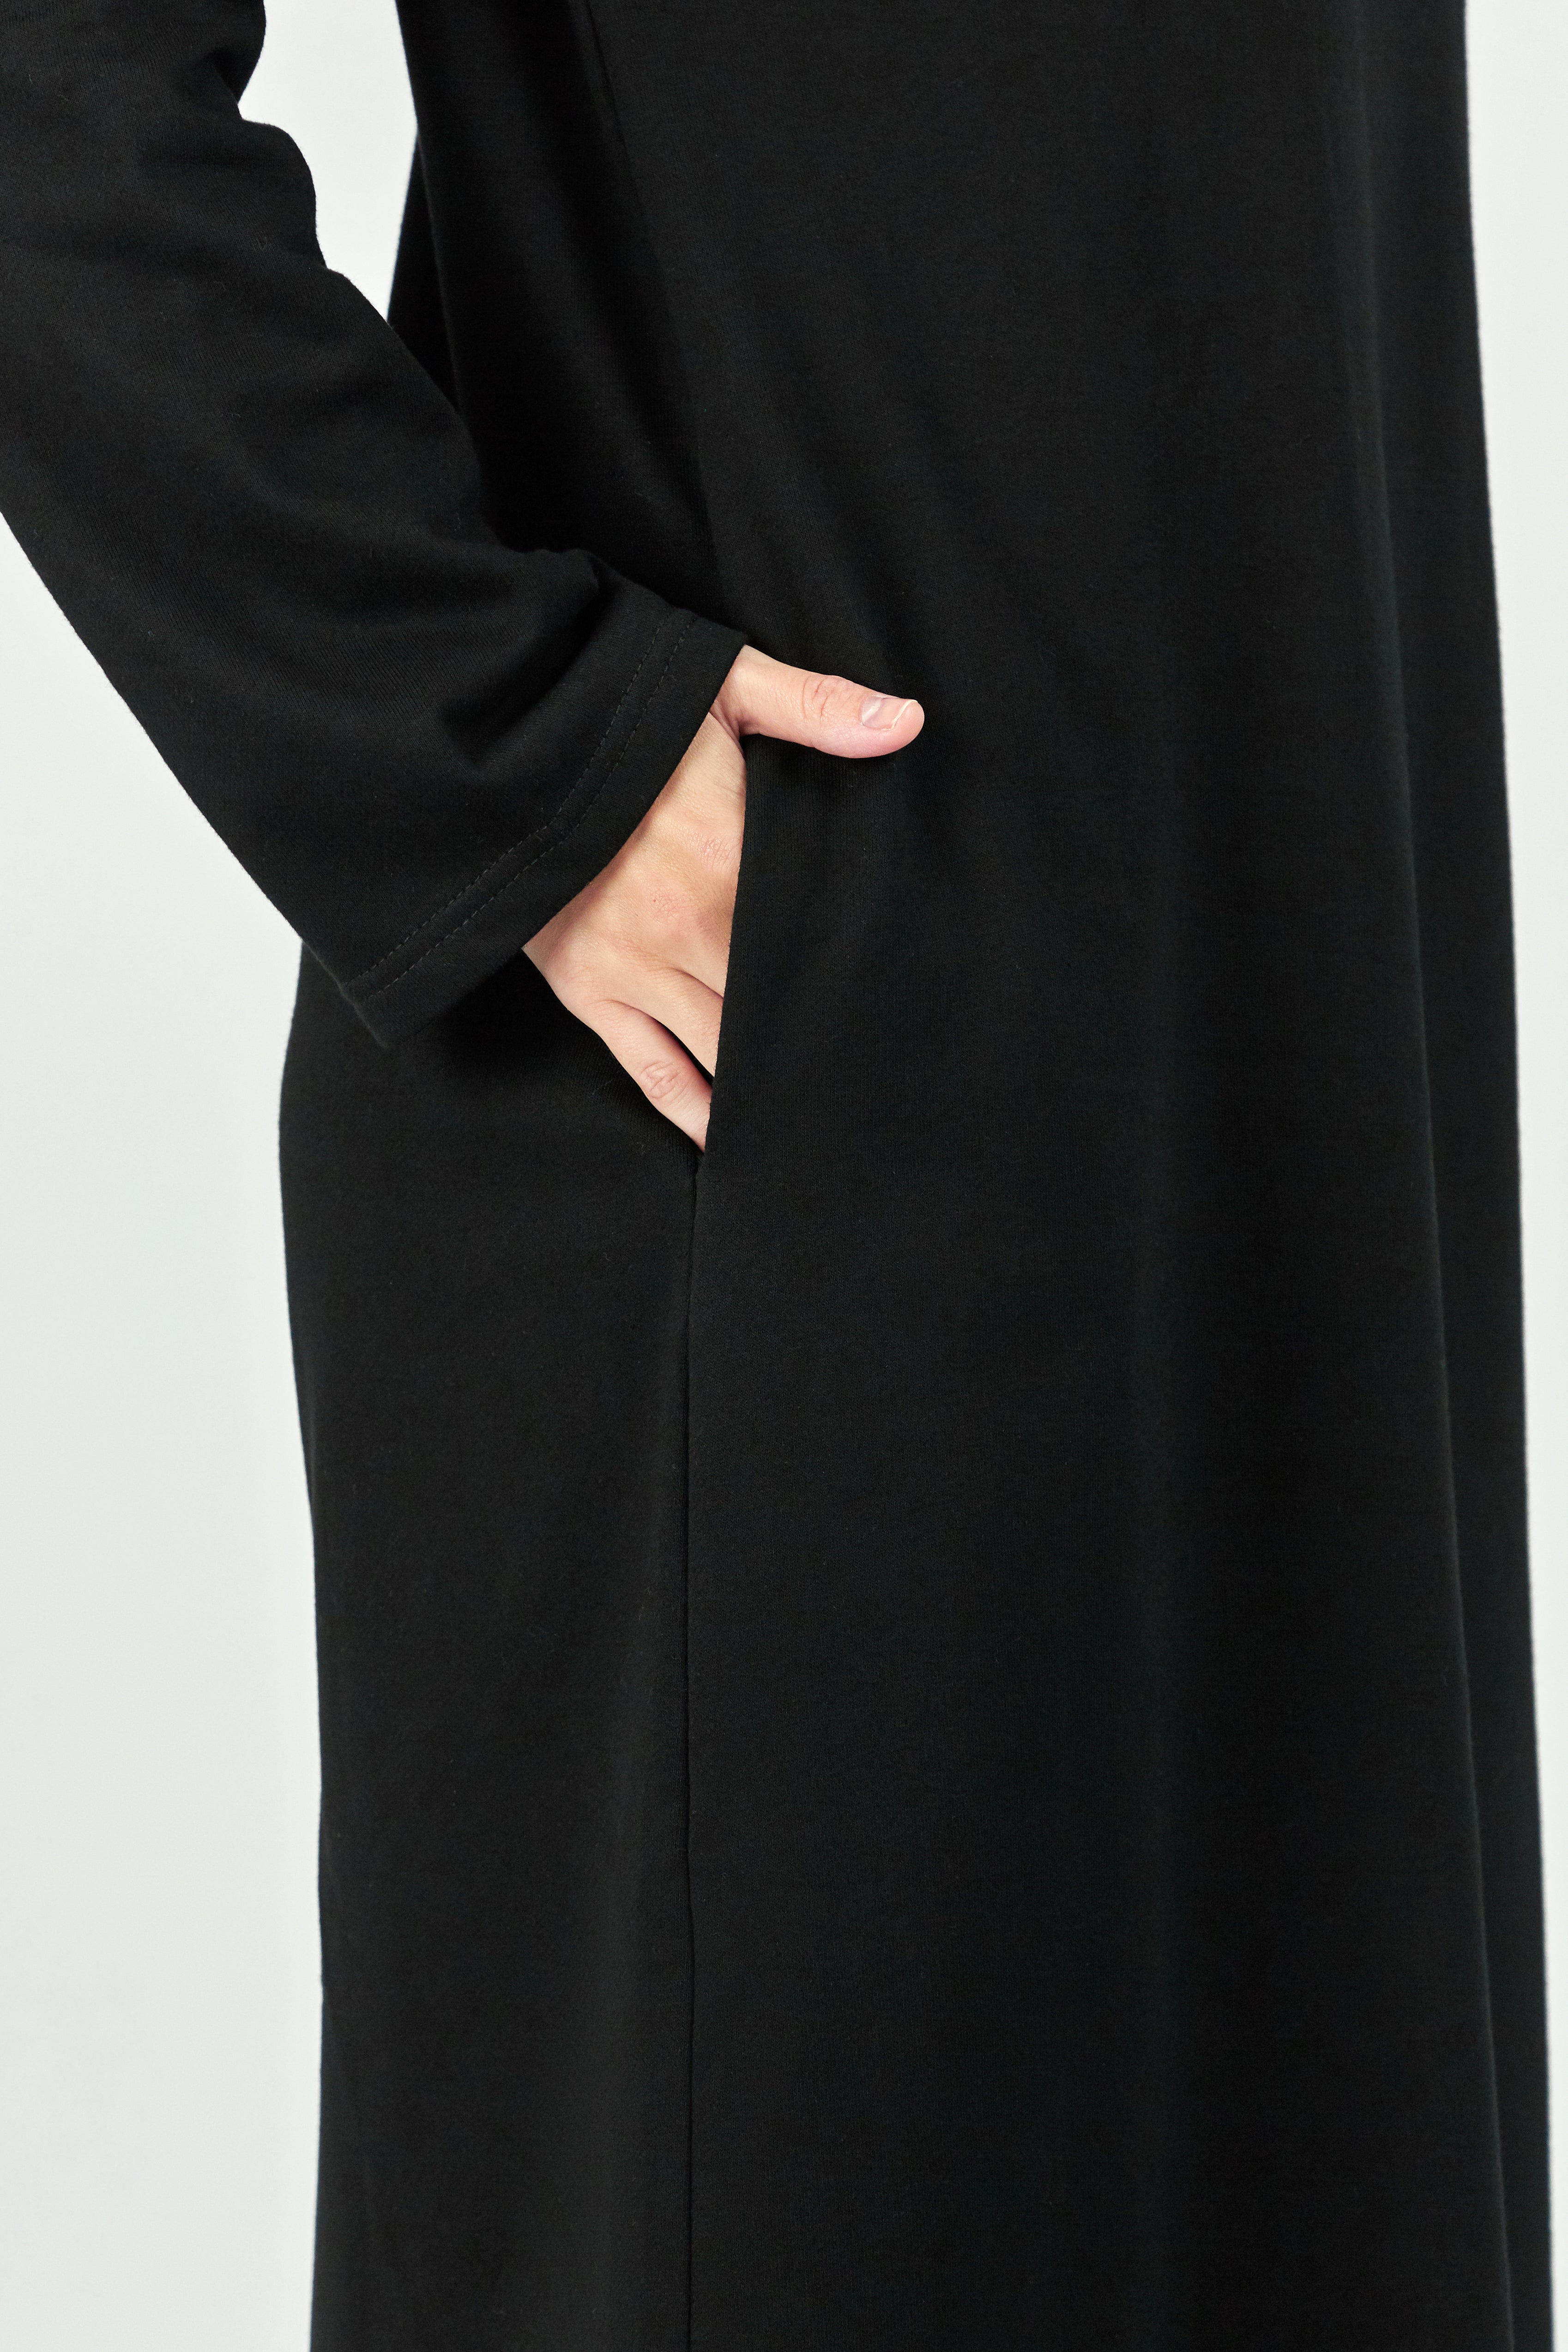 US - Wide Sleeve Sweatshirt Dress - Black